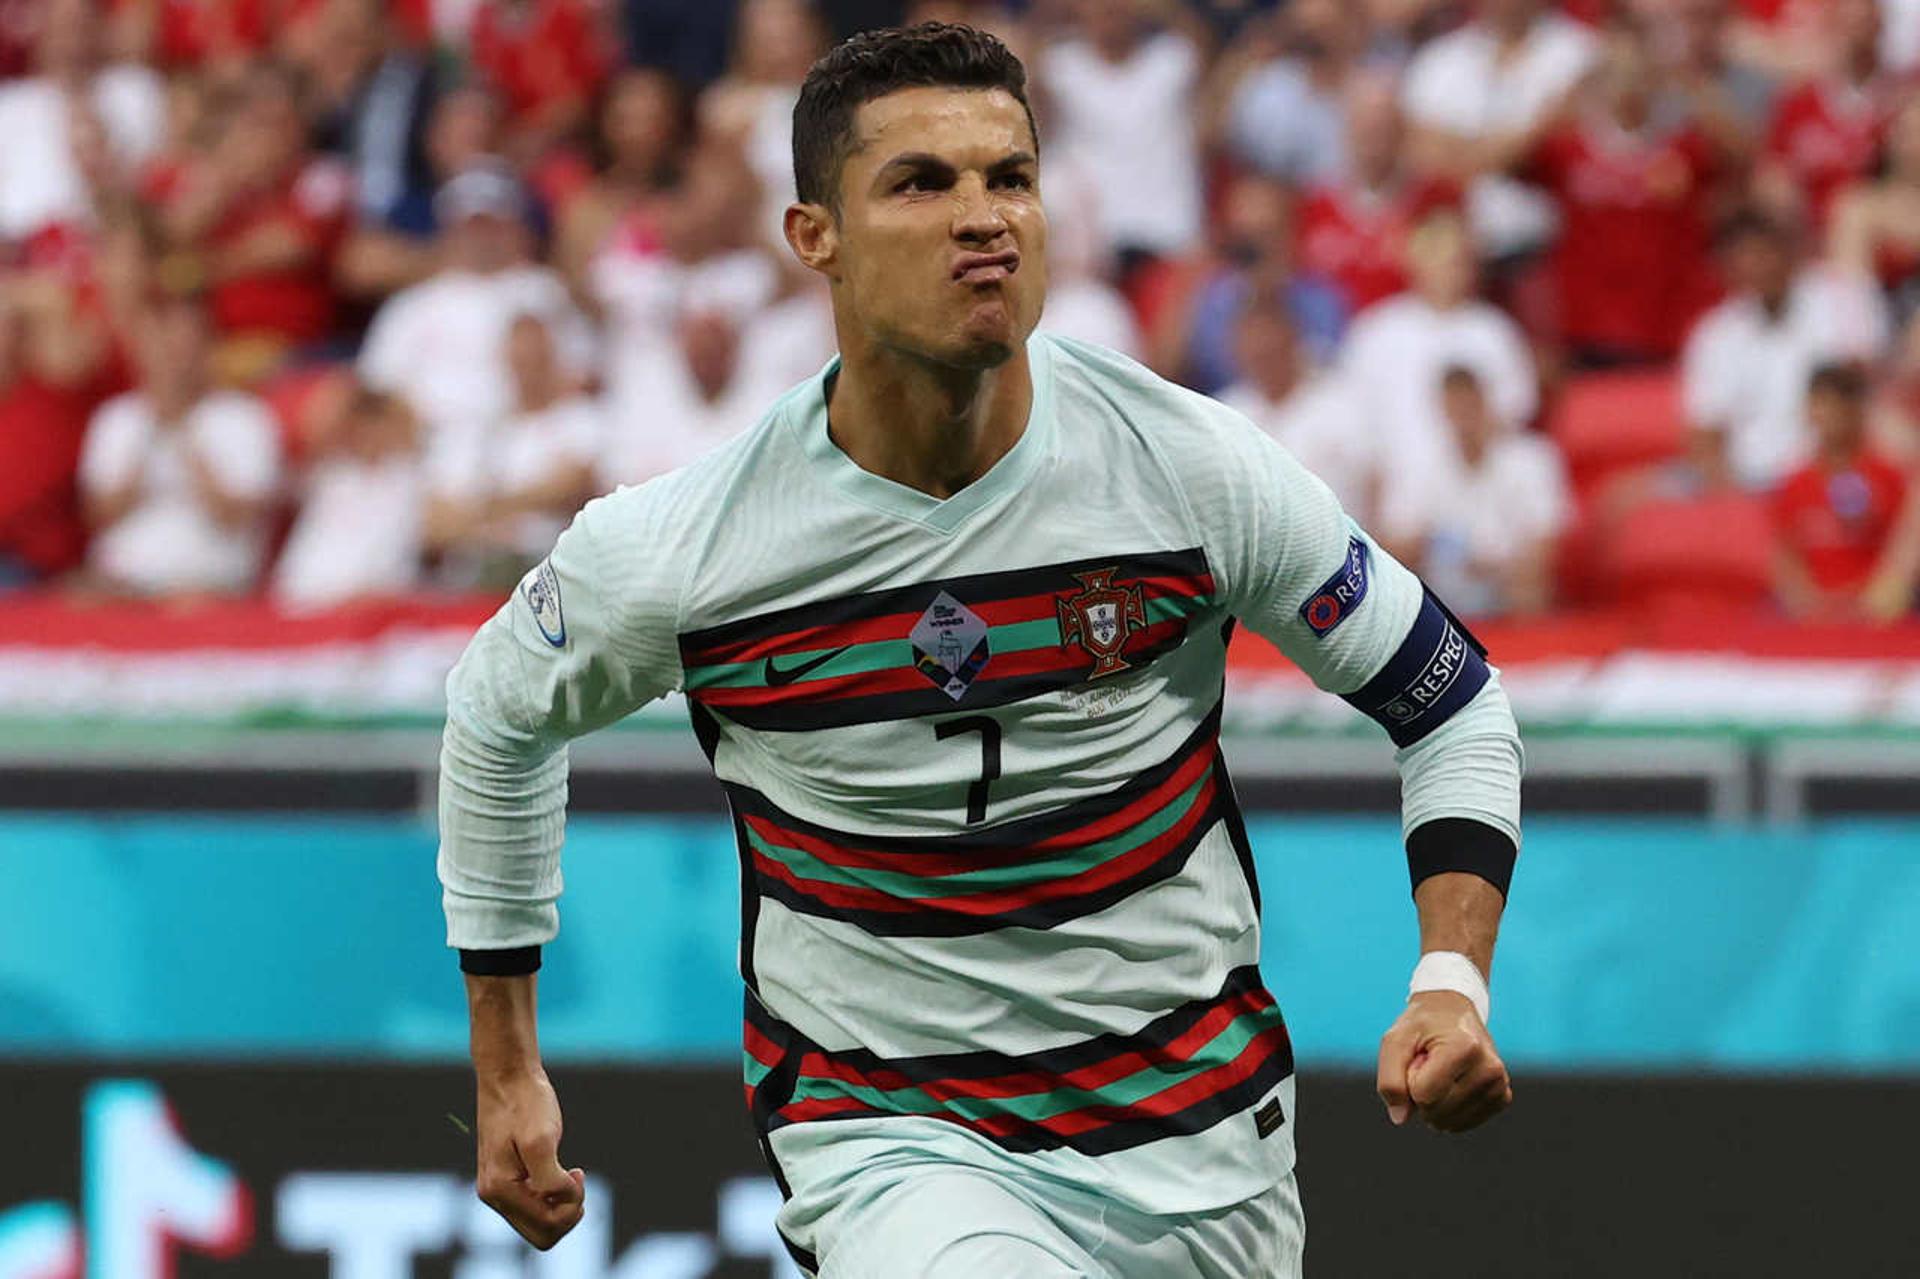 Hungria x Portugal - Cristiano Ronaldo